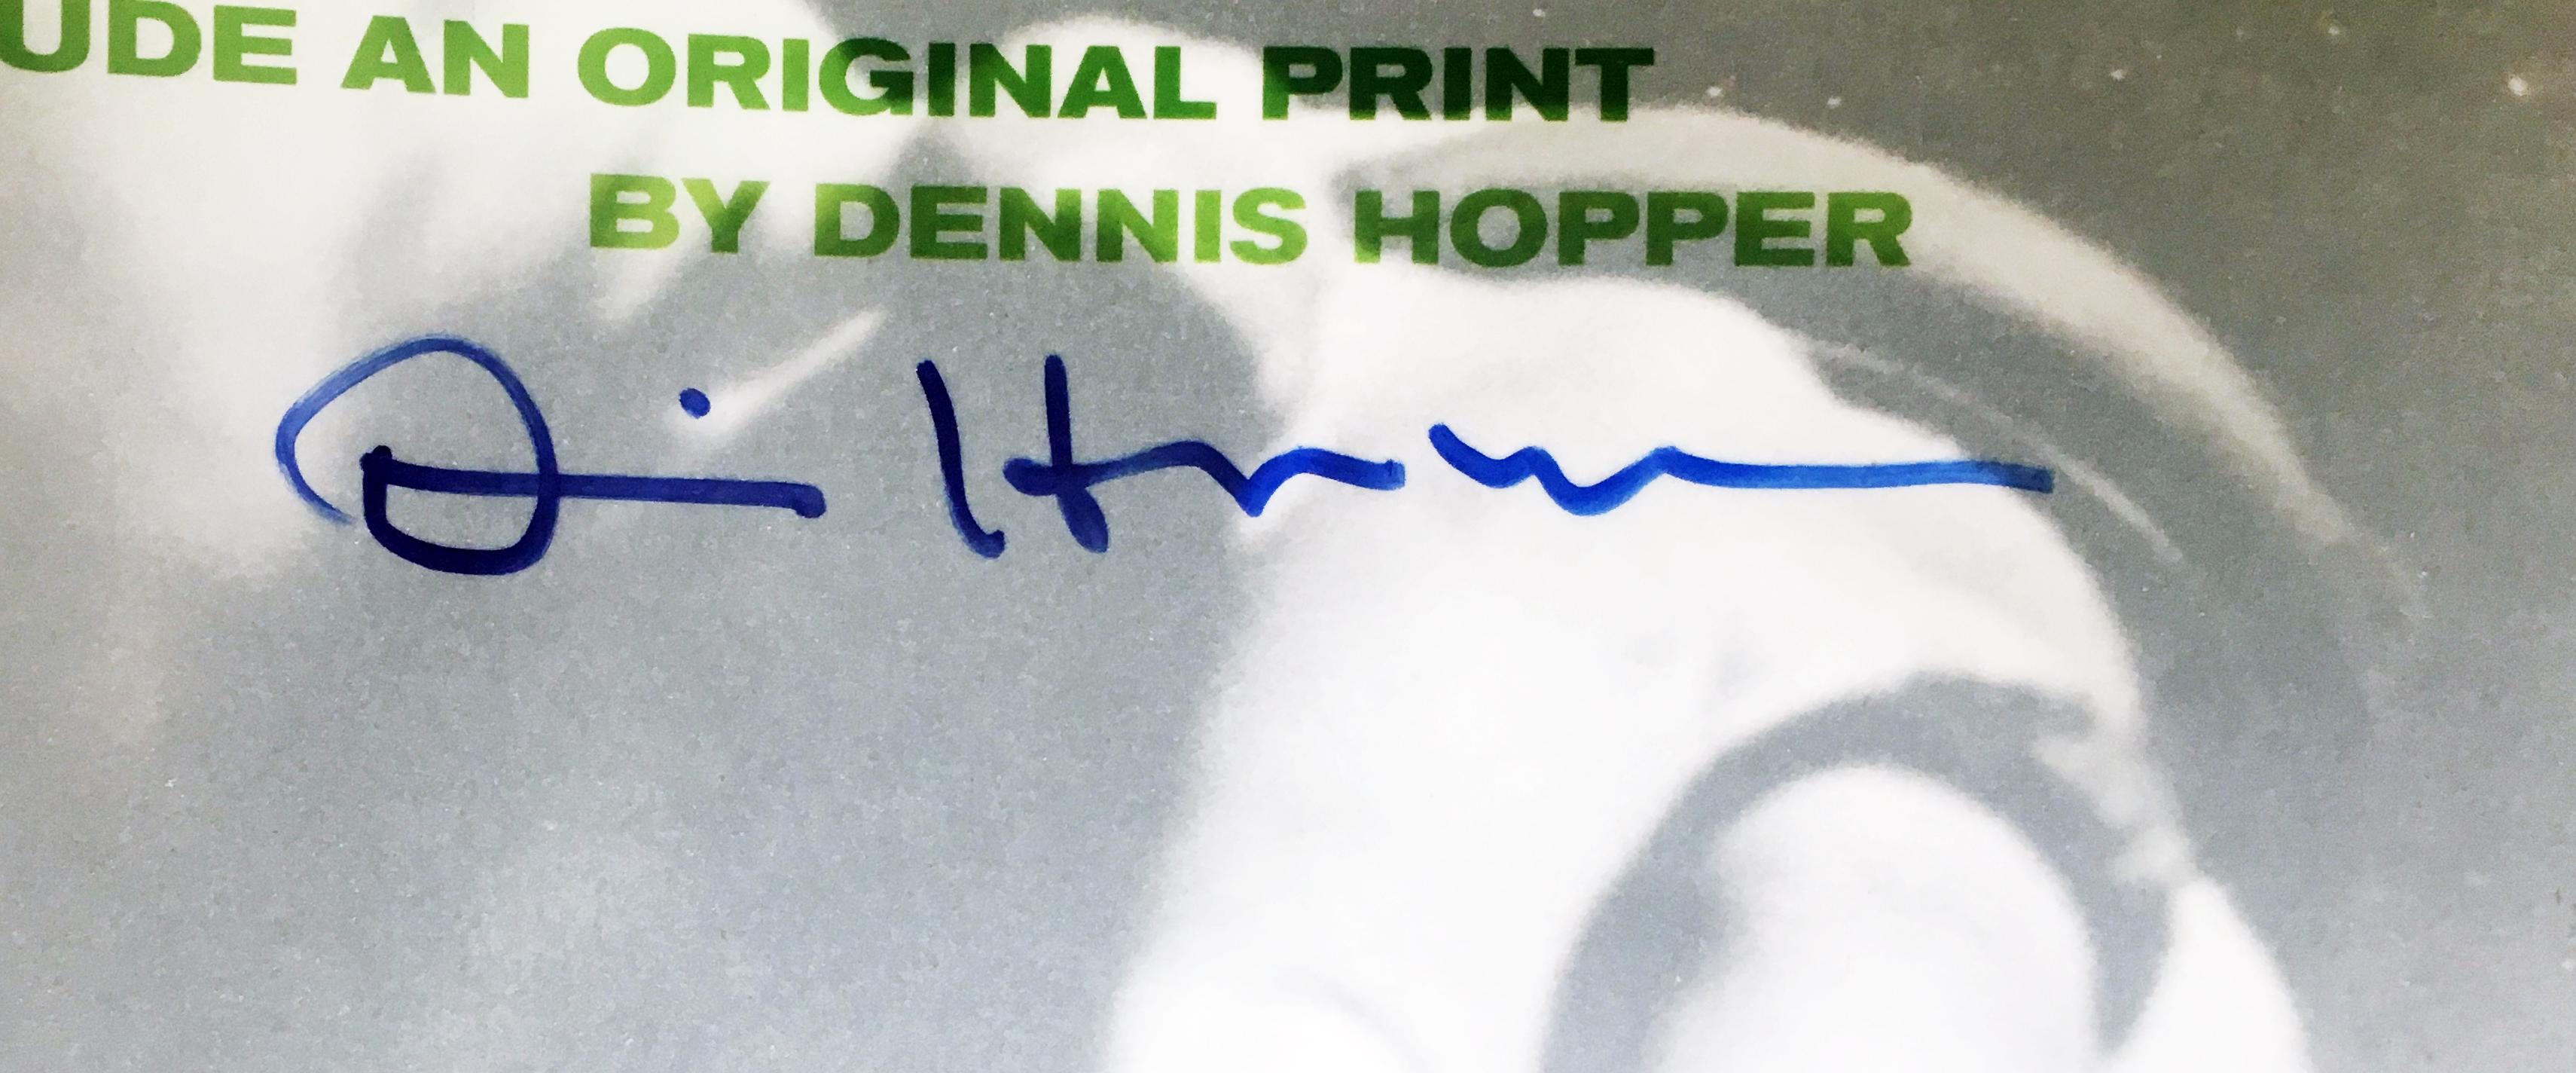 Dennis Hopper Photographs 1961 - 1967 (Limited Edition Hand Signed) For Sale 1